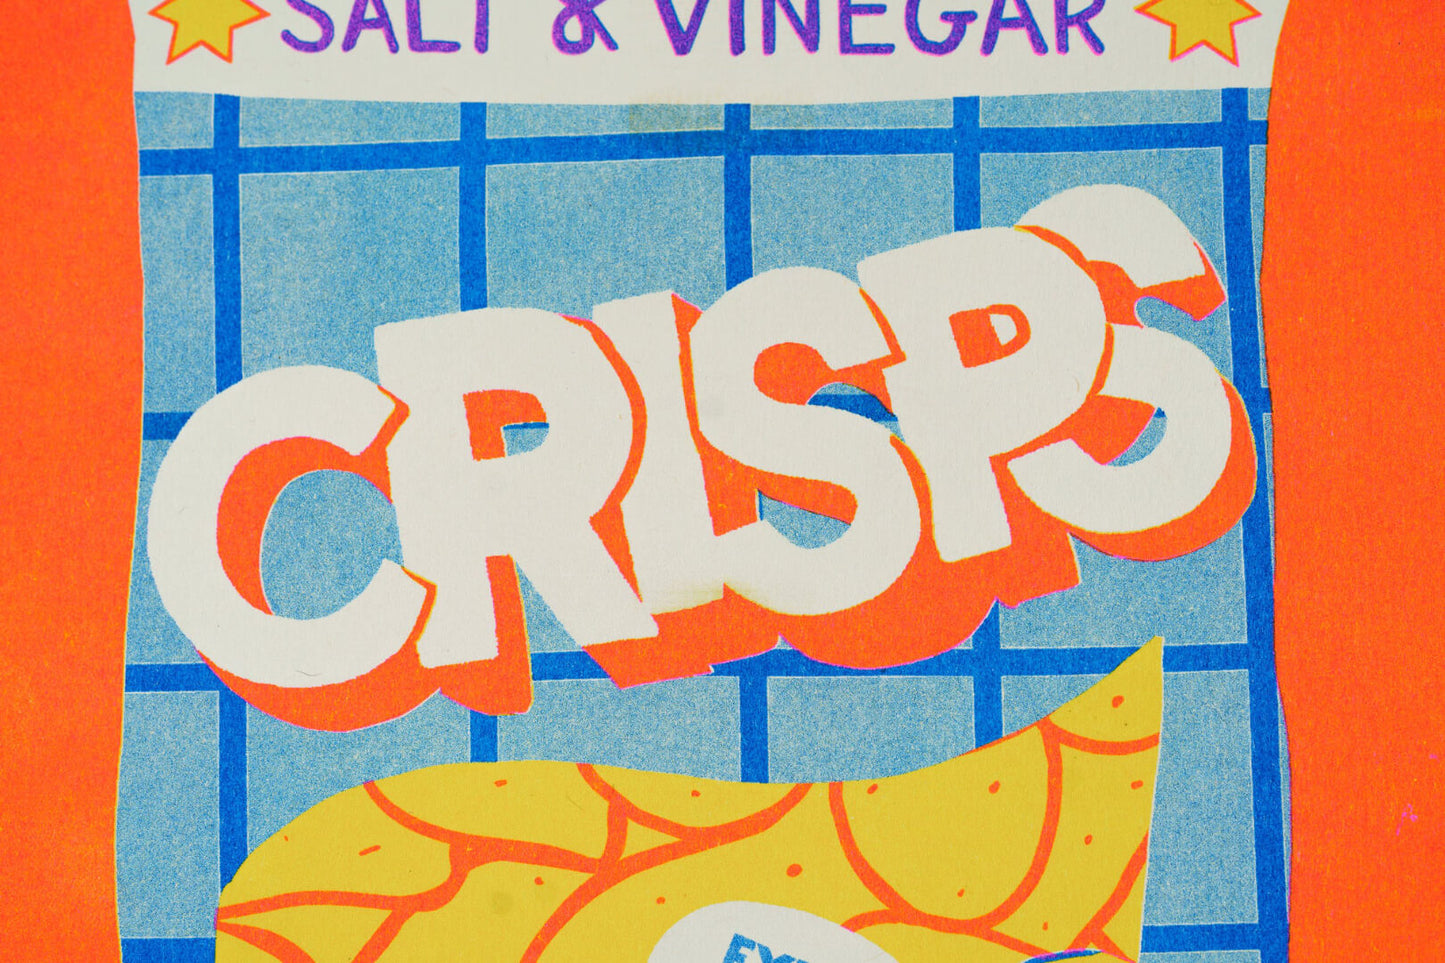 Salt & Vinegar Crisps A4 Riso Print